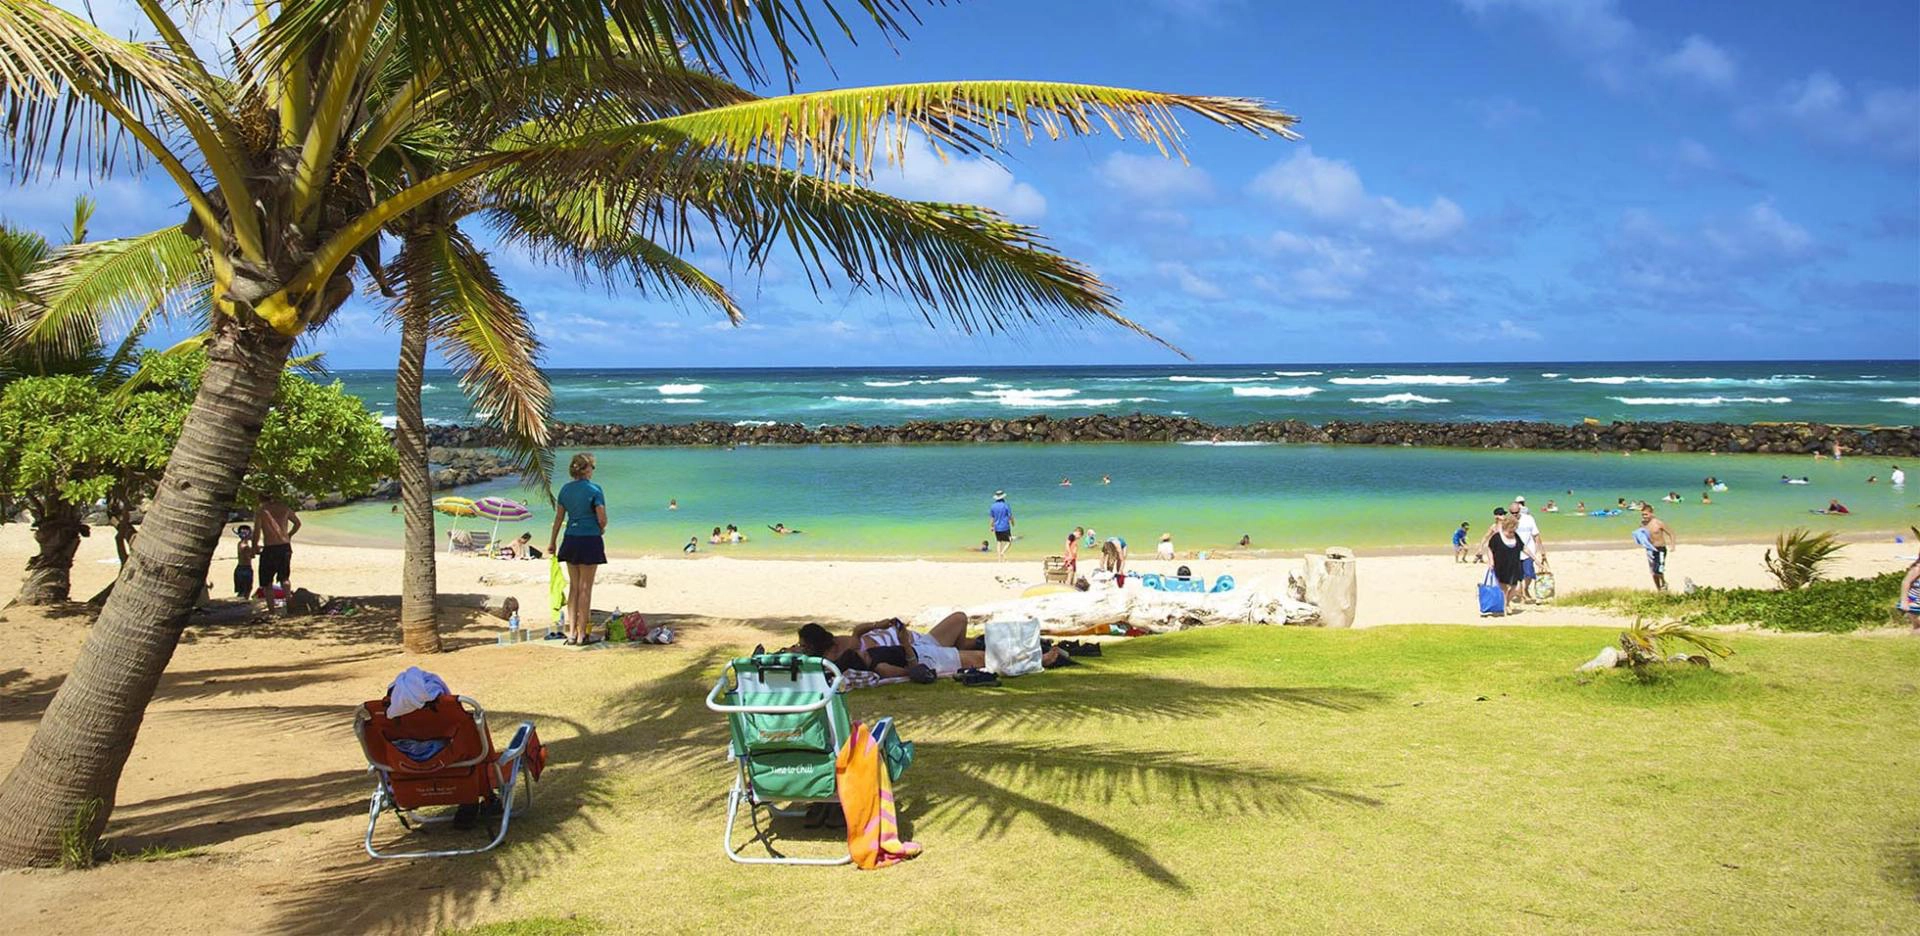  Lydgate  strand - Hawaii Islands